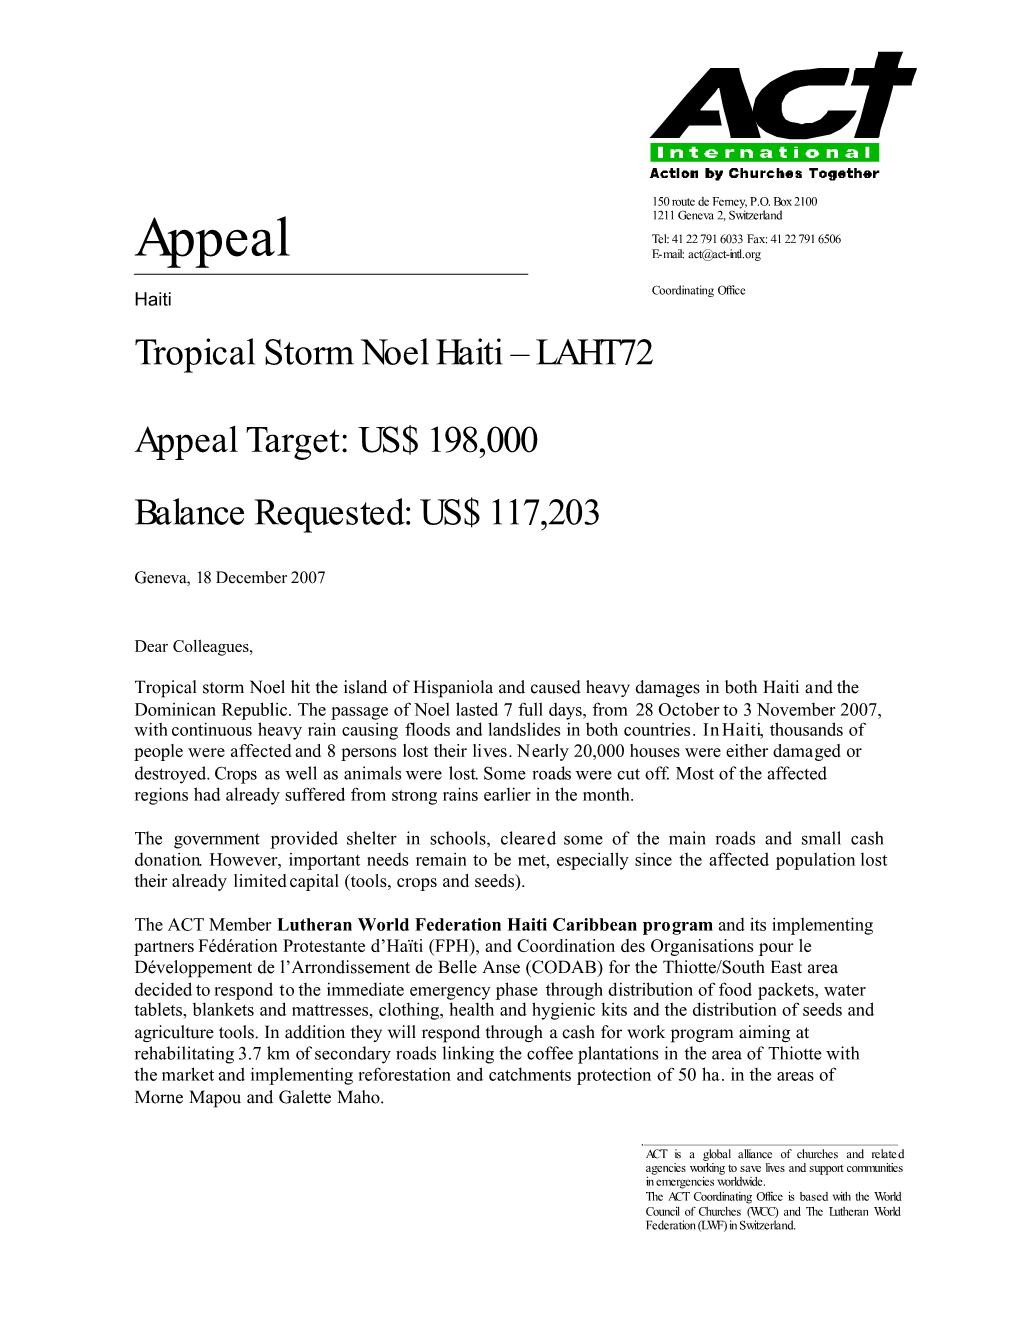 ACT Appeal Tropical Storm Noel